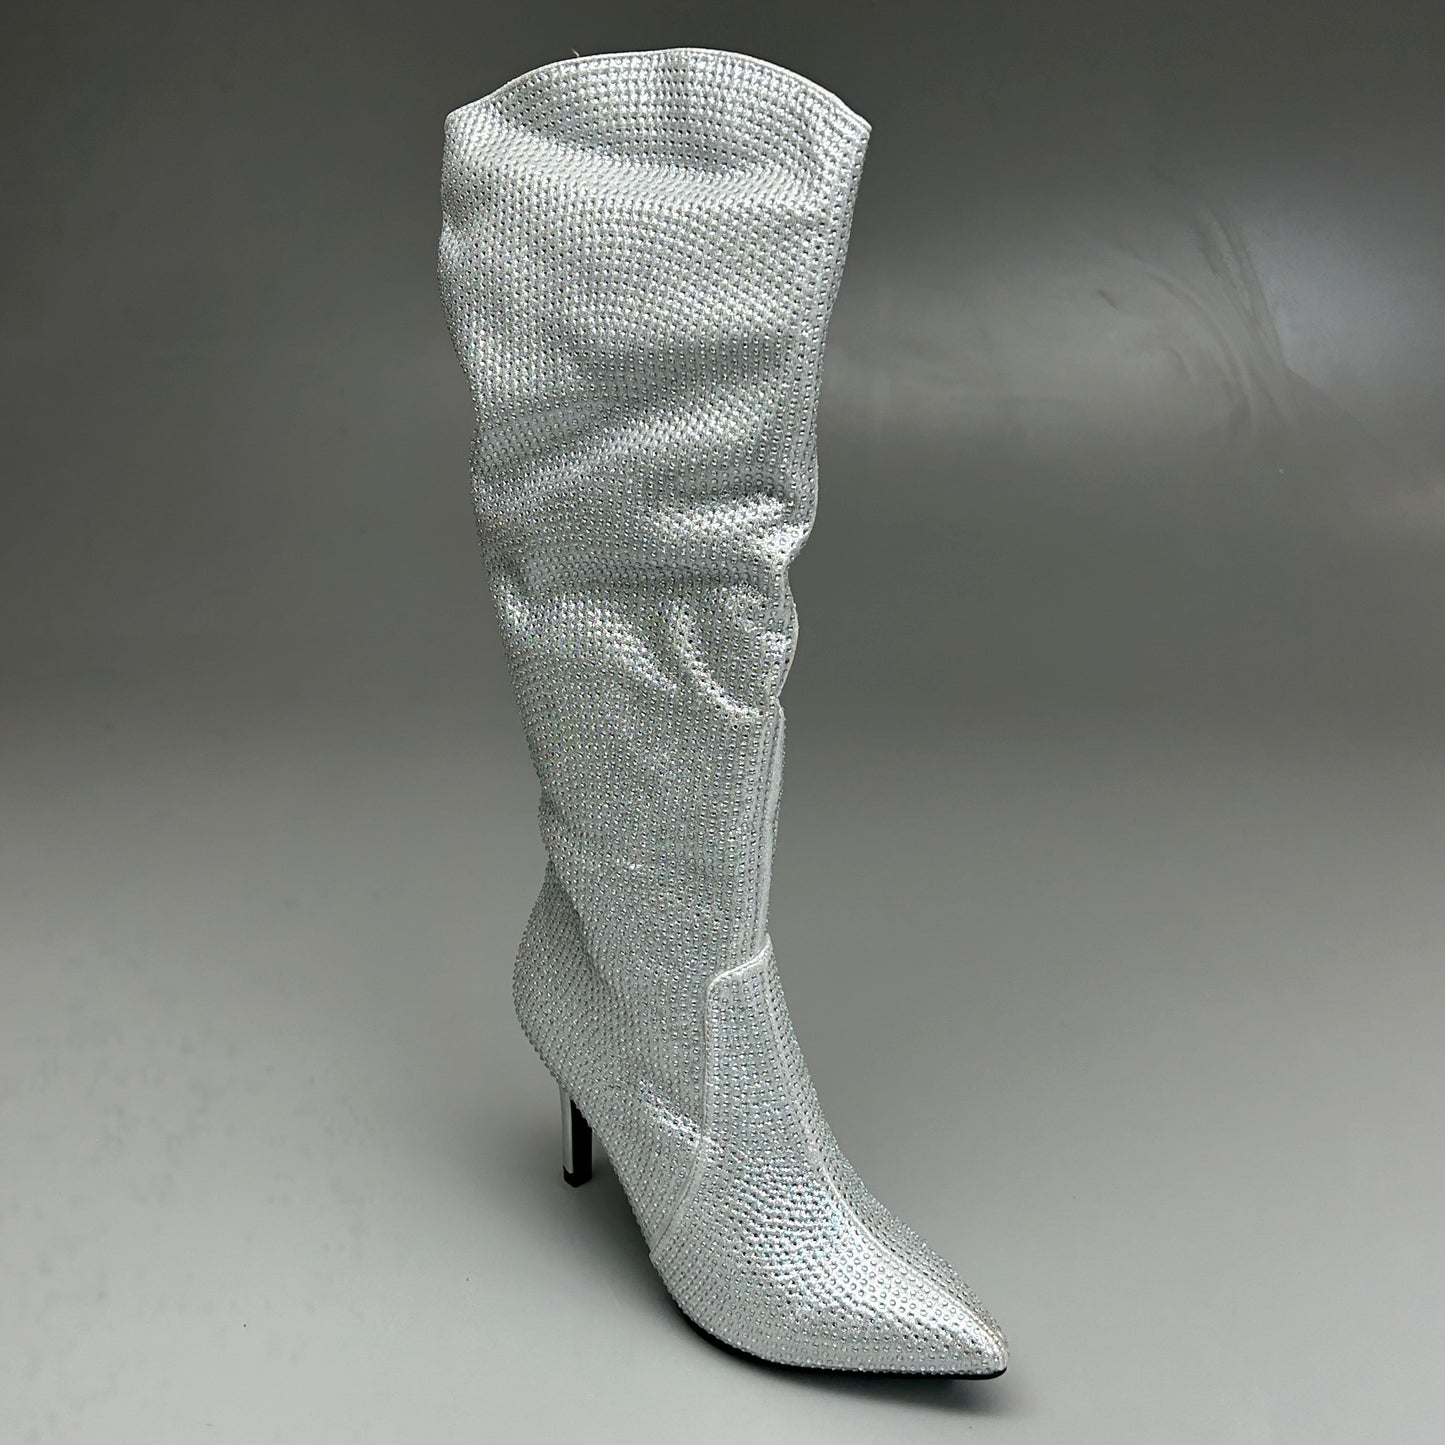 MIA Mackynzie Silver Stone Tall Heeled Boots Sz 7M Q100302